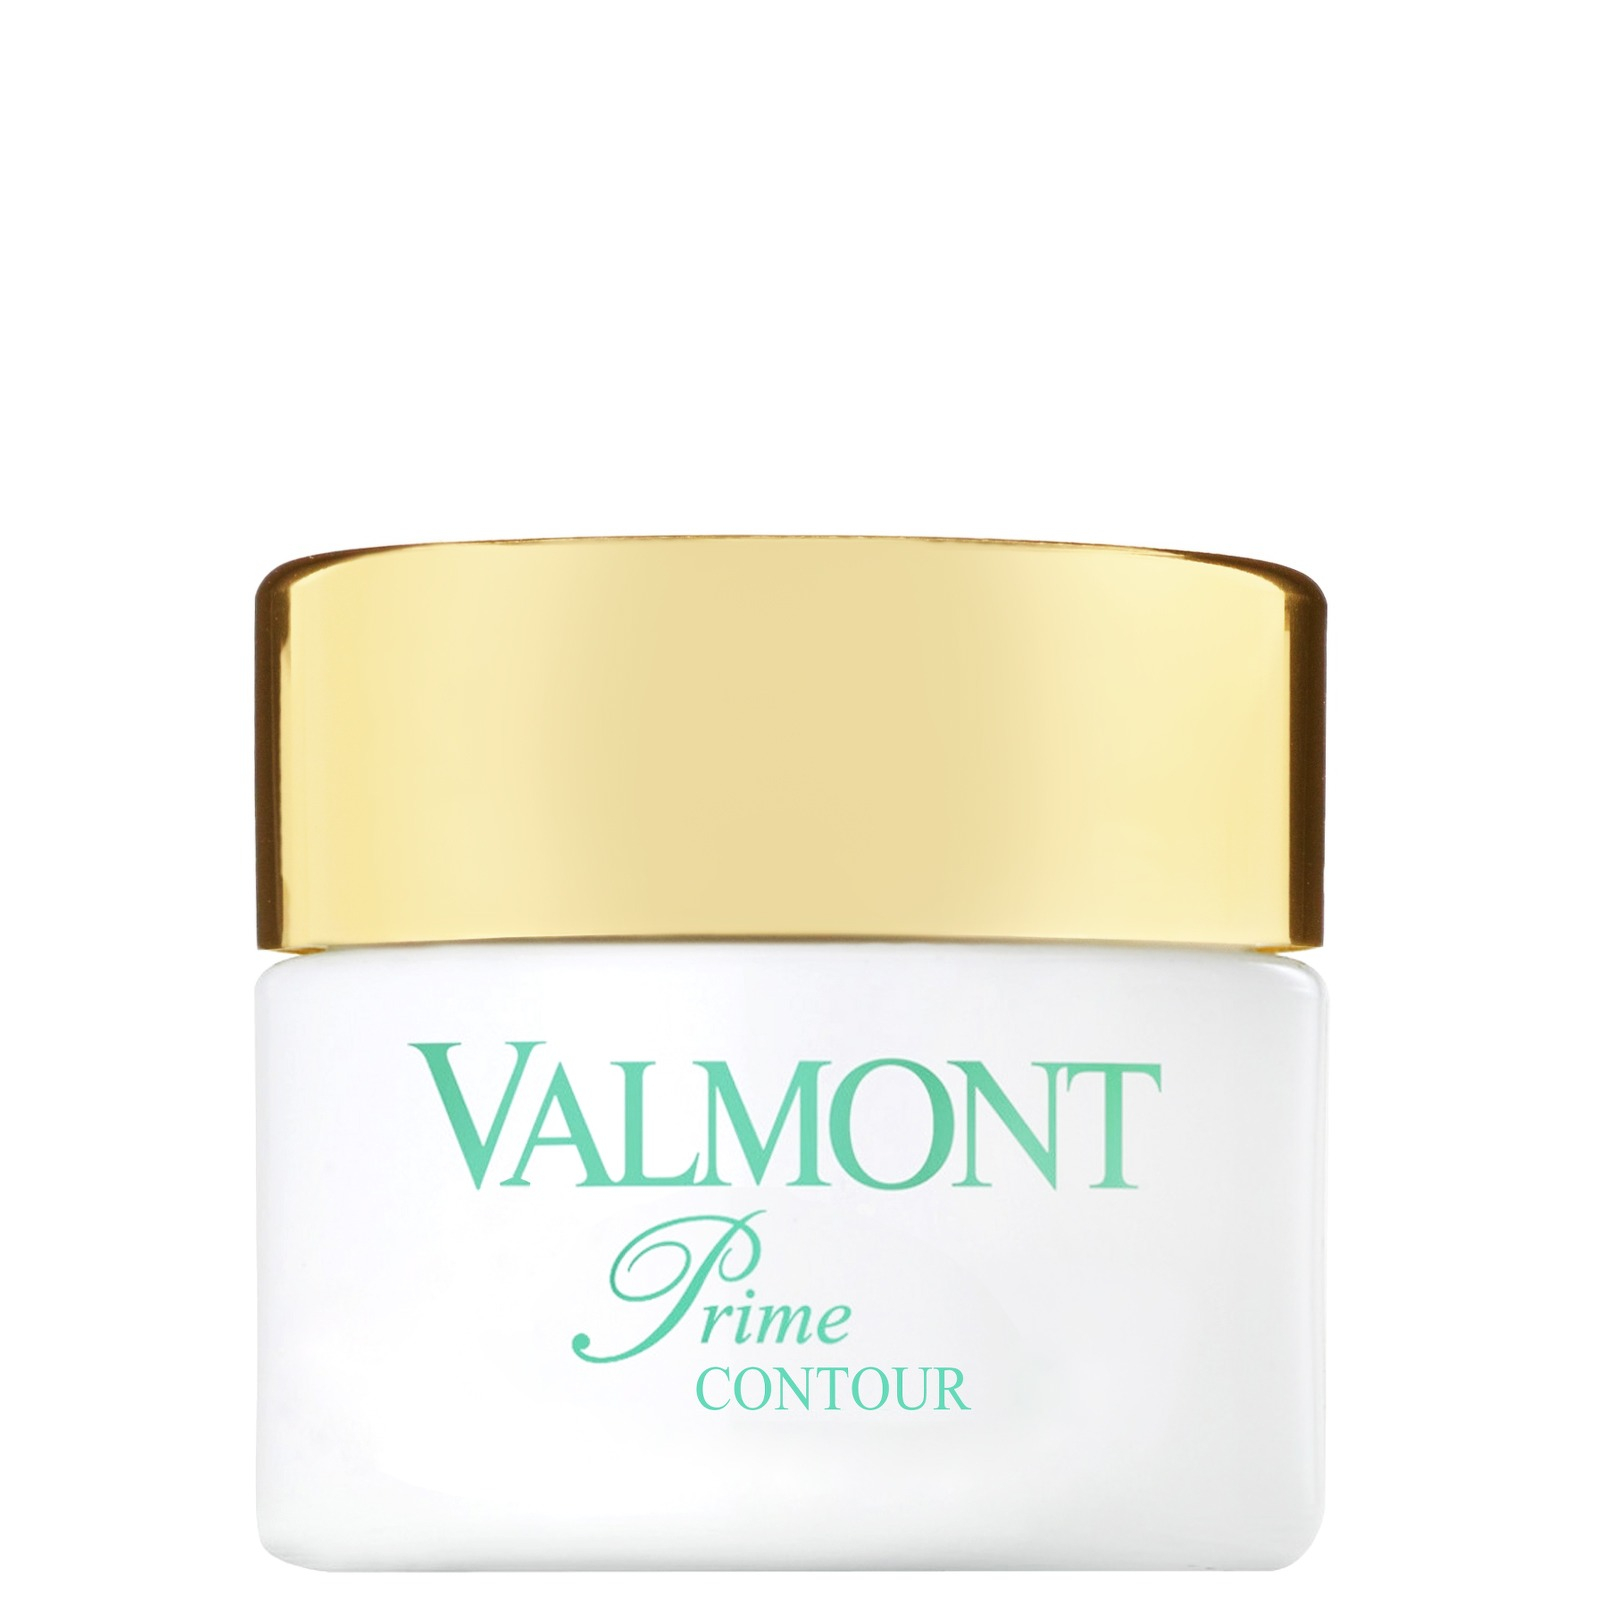 Valmont - Prime Contour (50ml)